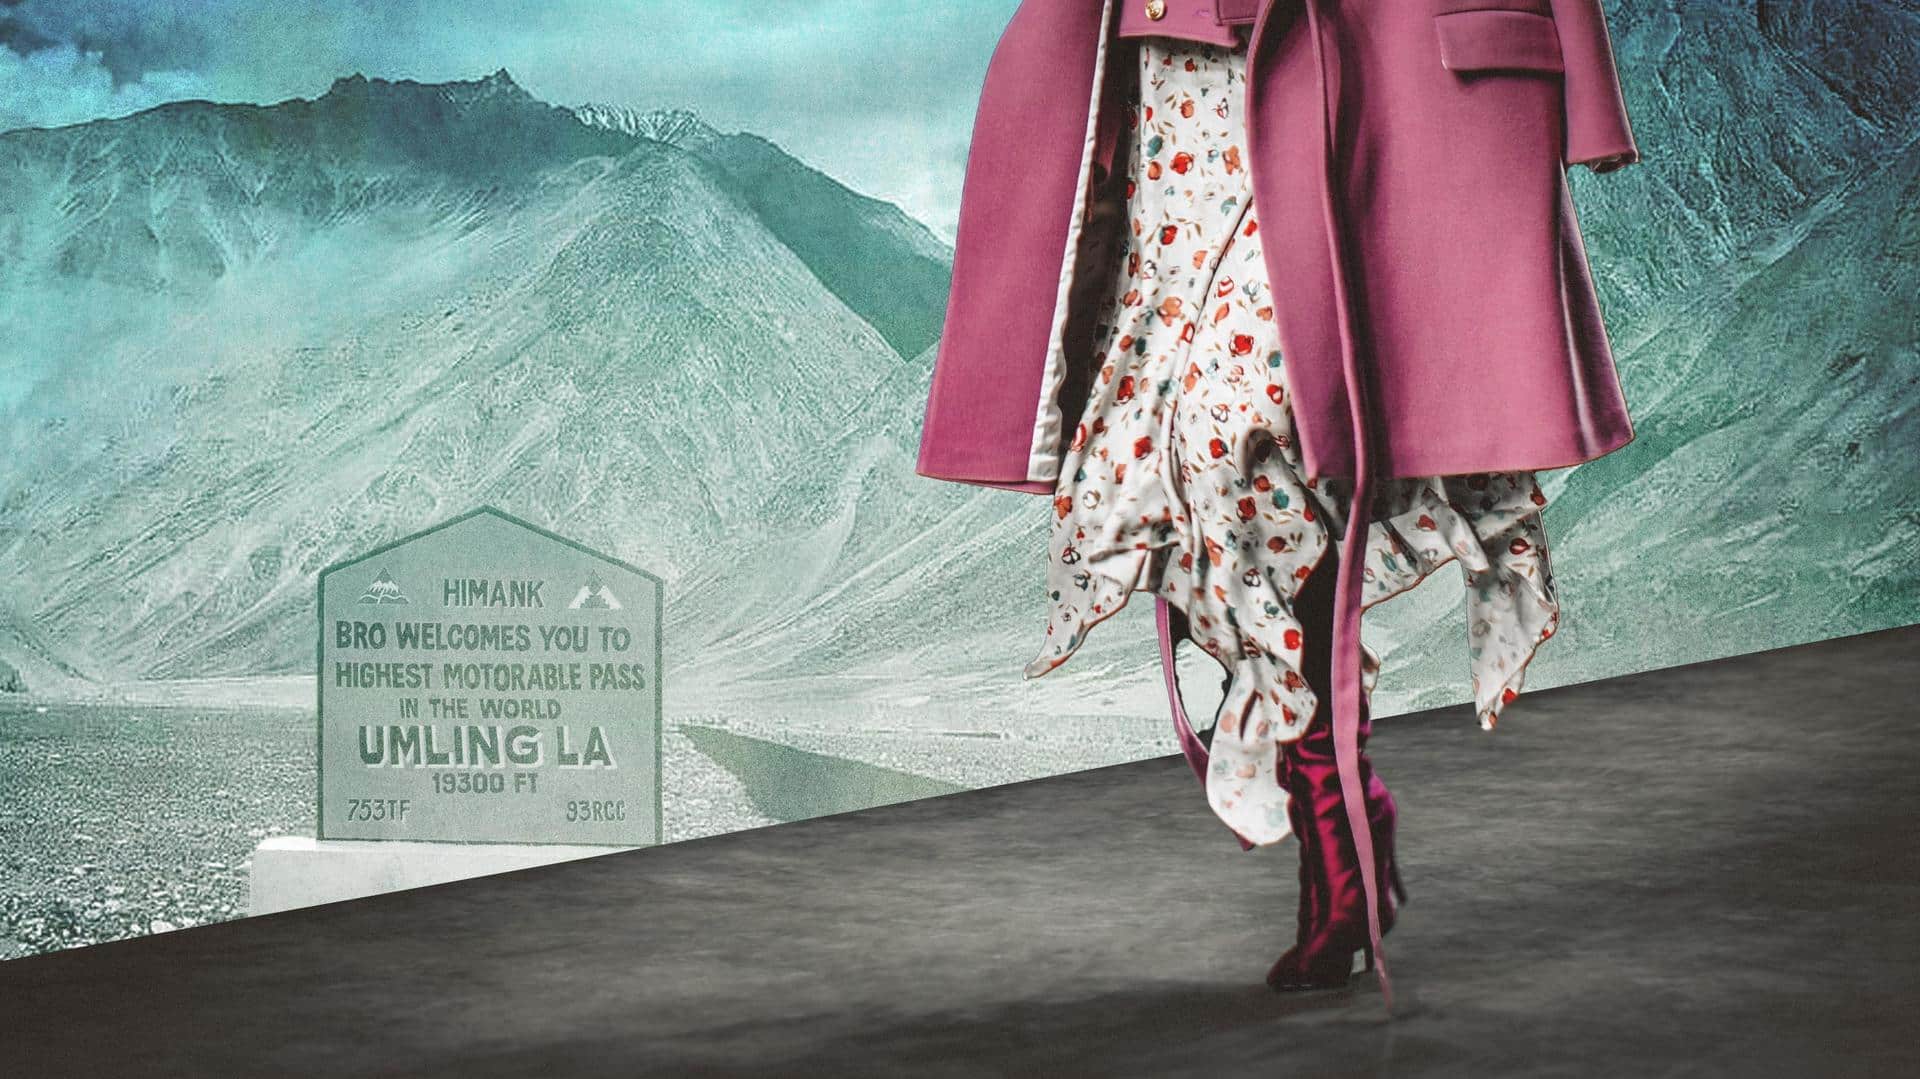 Heights of fashion: Ladakh to host high-altitude international fashion runway